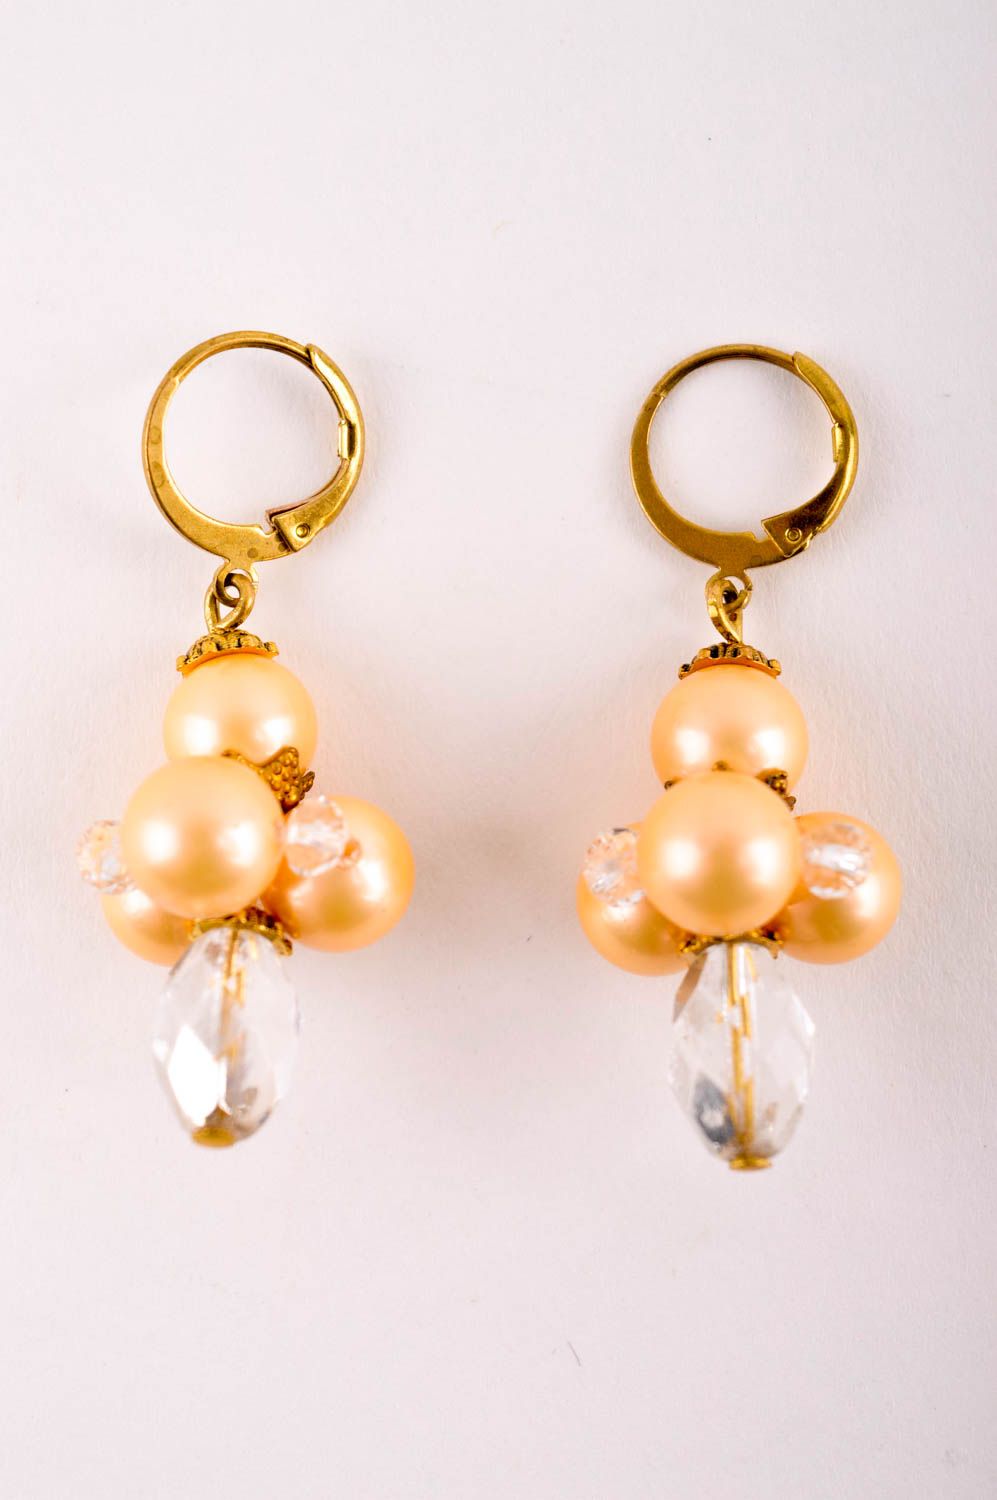 Handmade earrings stones earrings unusual earrings with charms designer jewelry photo 3